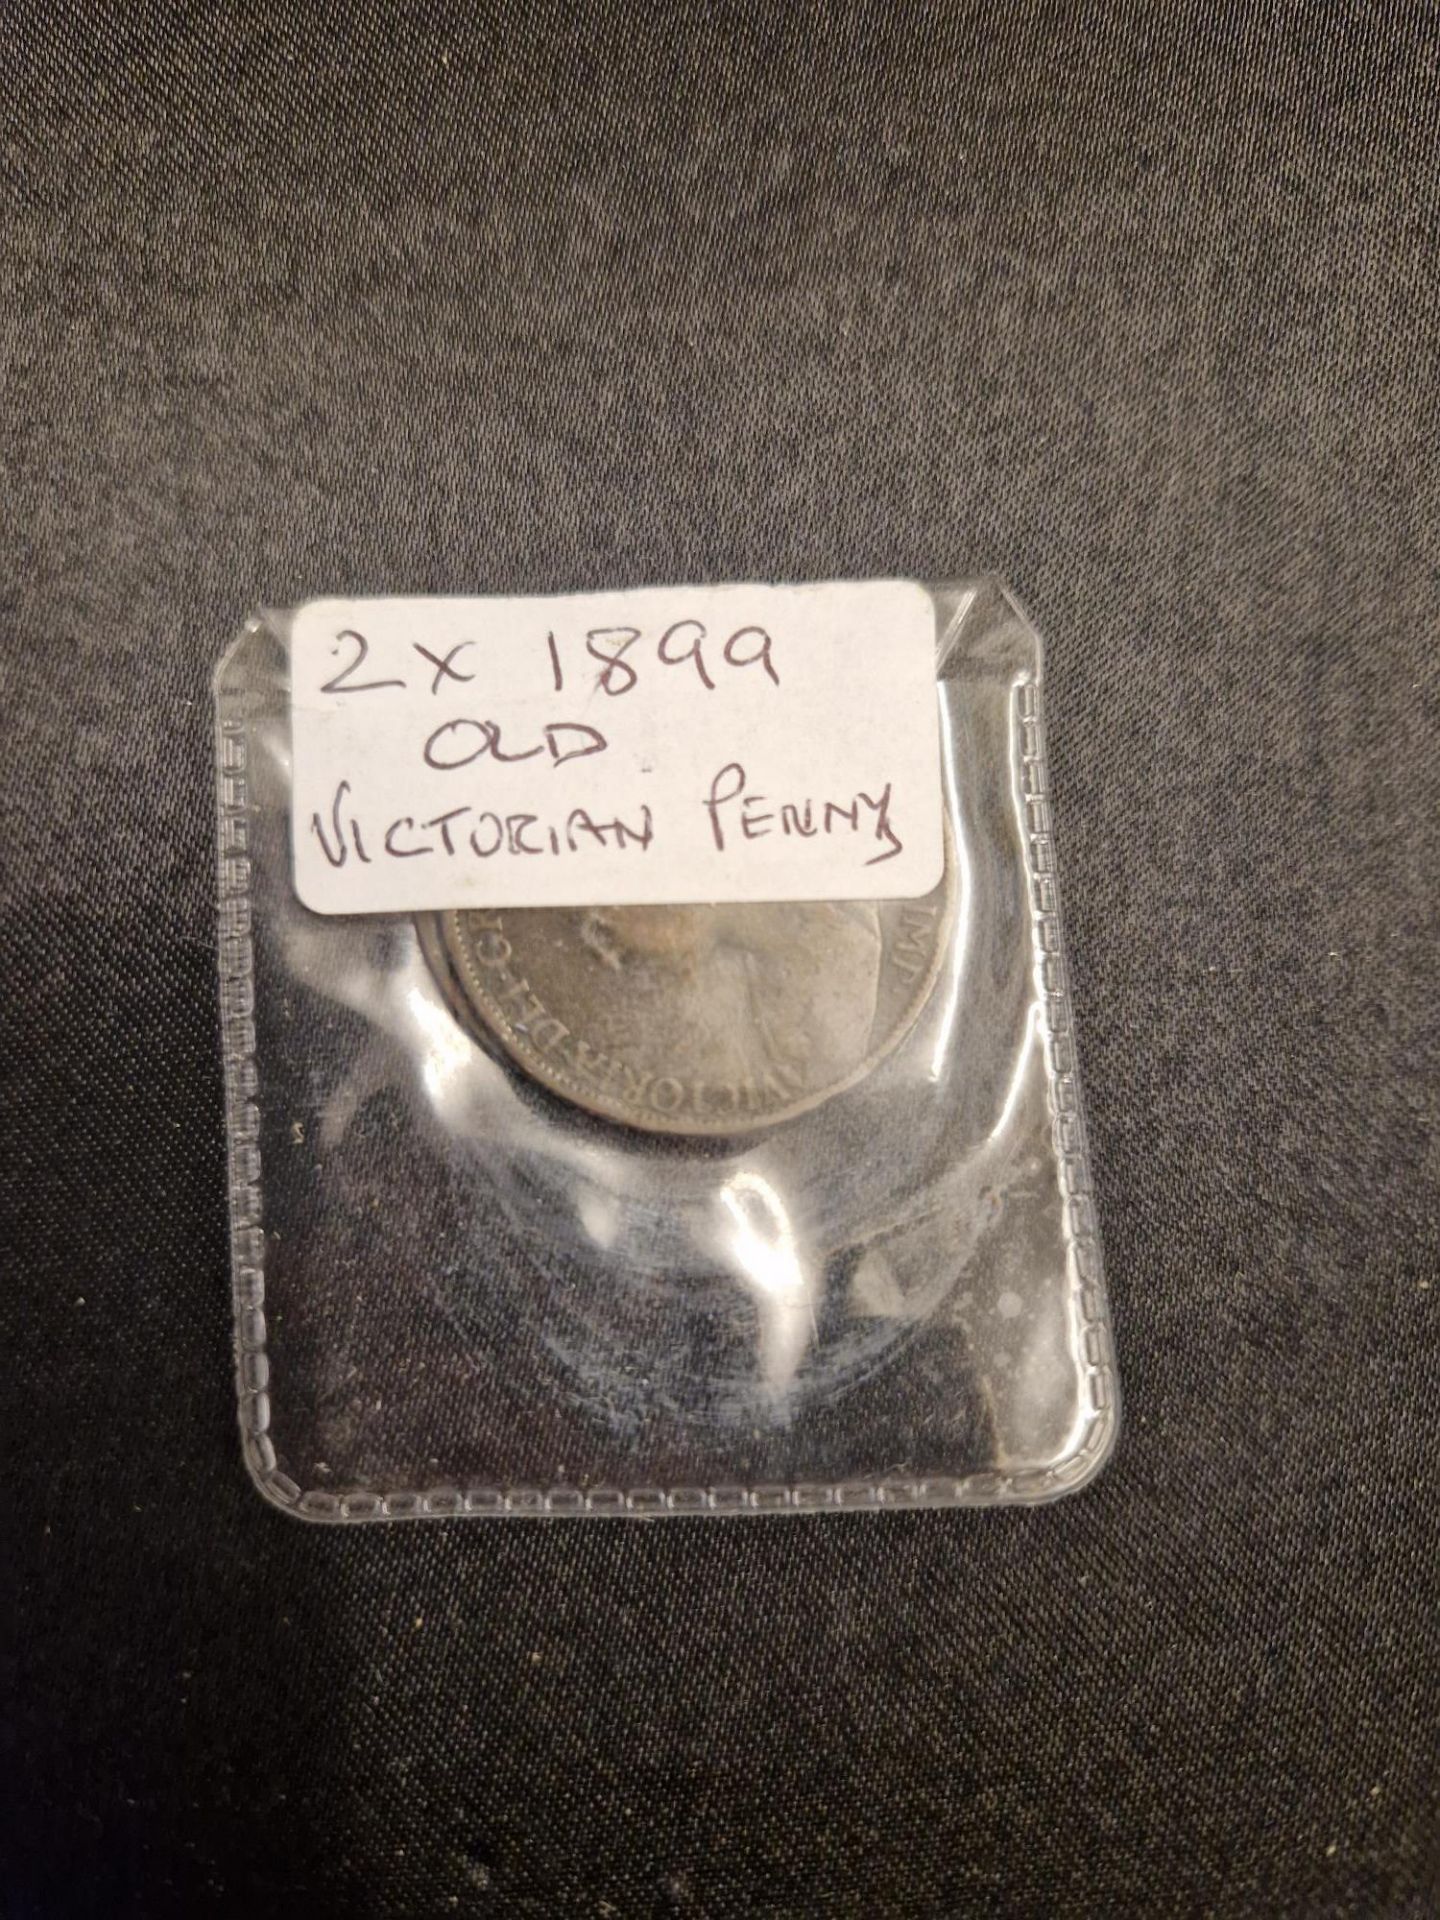 2 x 1899 victorian pennys